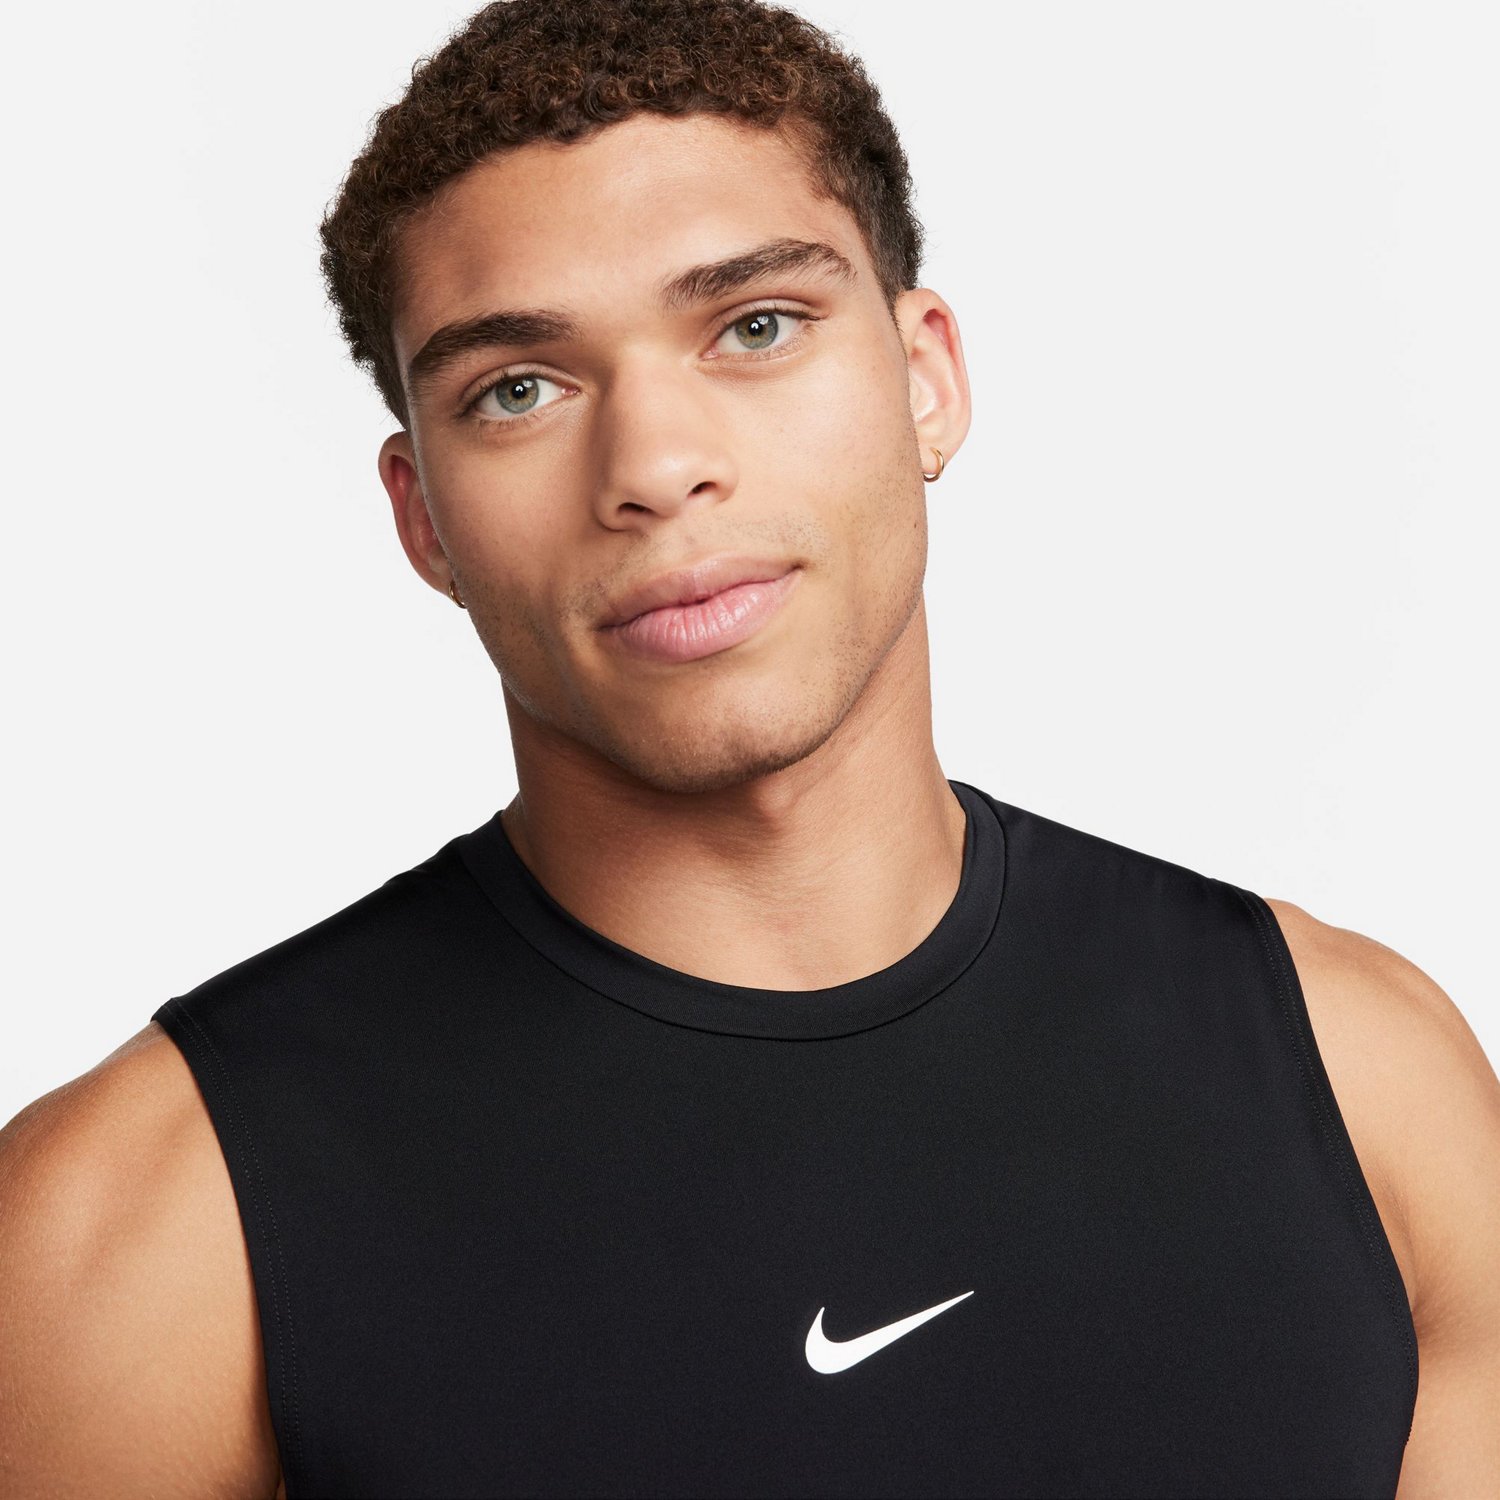 Nike Men's Slim Sleeveless Top | Free Shipping at Academy